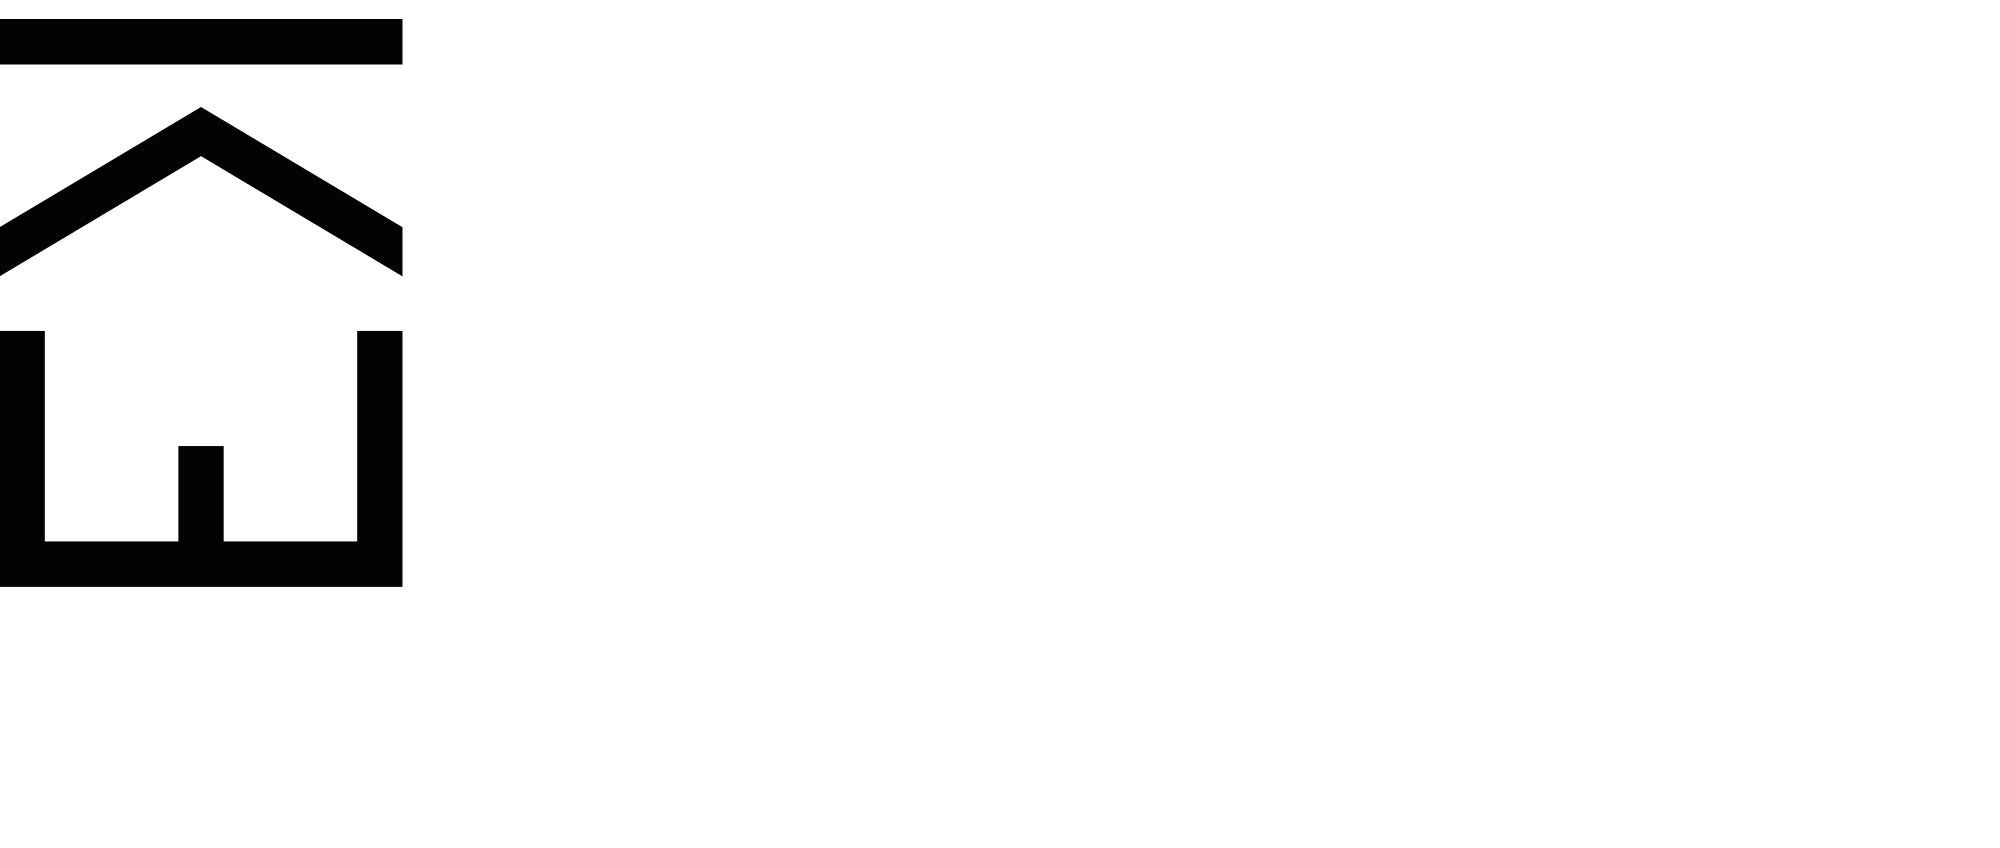 Knight Edmonds